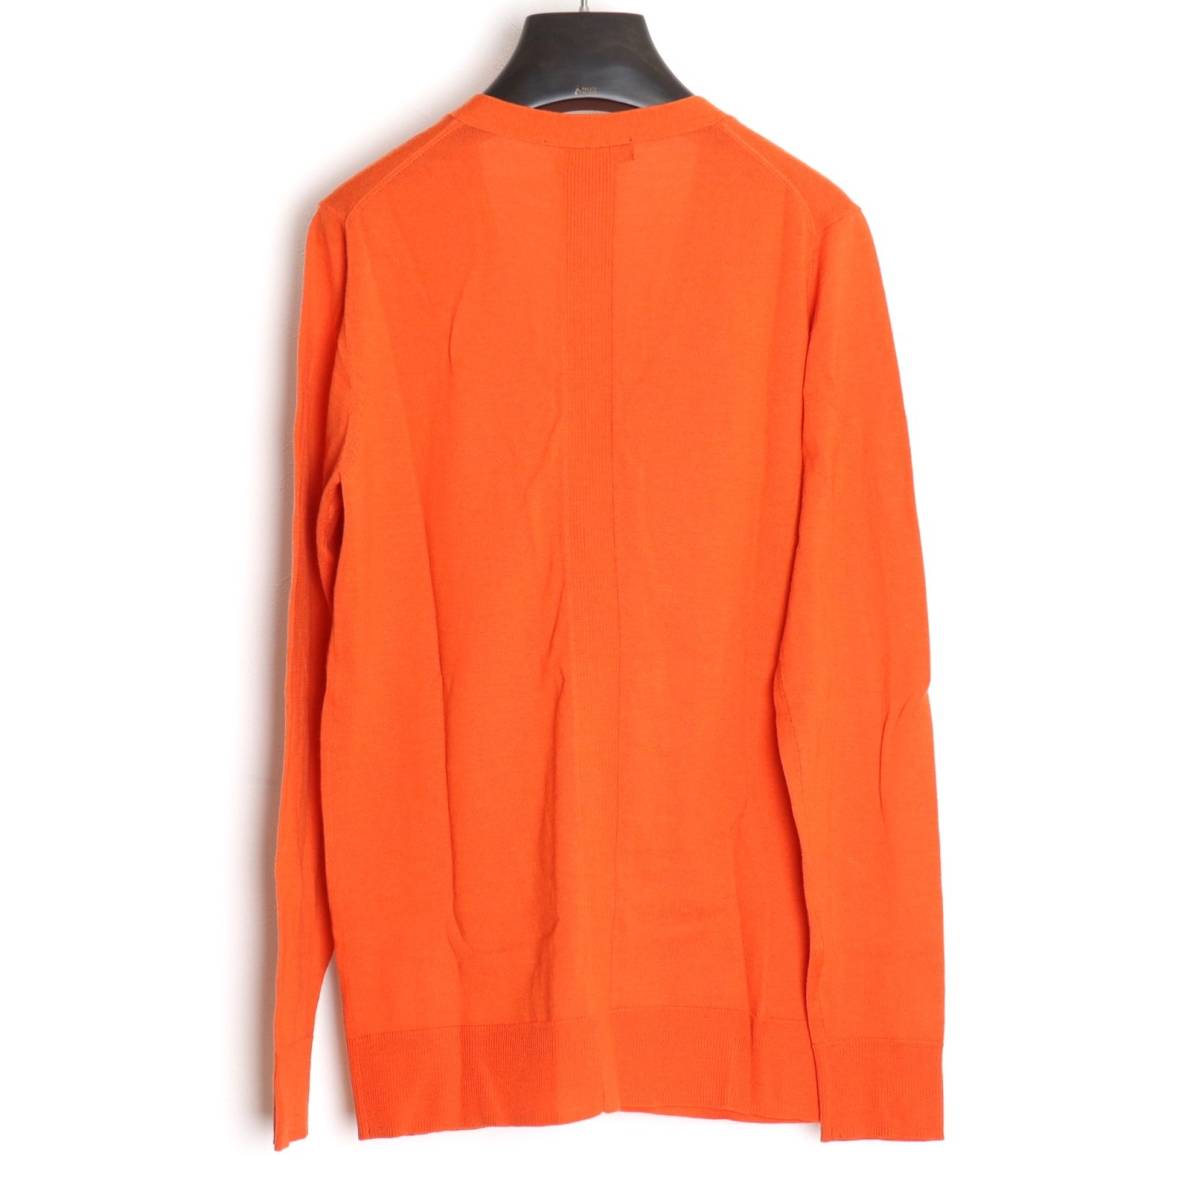 jun hashimoto 12AW BACK RIB CARDIGANmelino шерсть 100% orange высокий мера вязаный V шея кардиган свитер 1piu1uguale3/AKM относящийся 